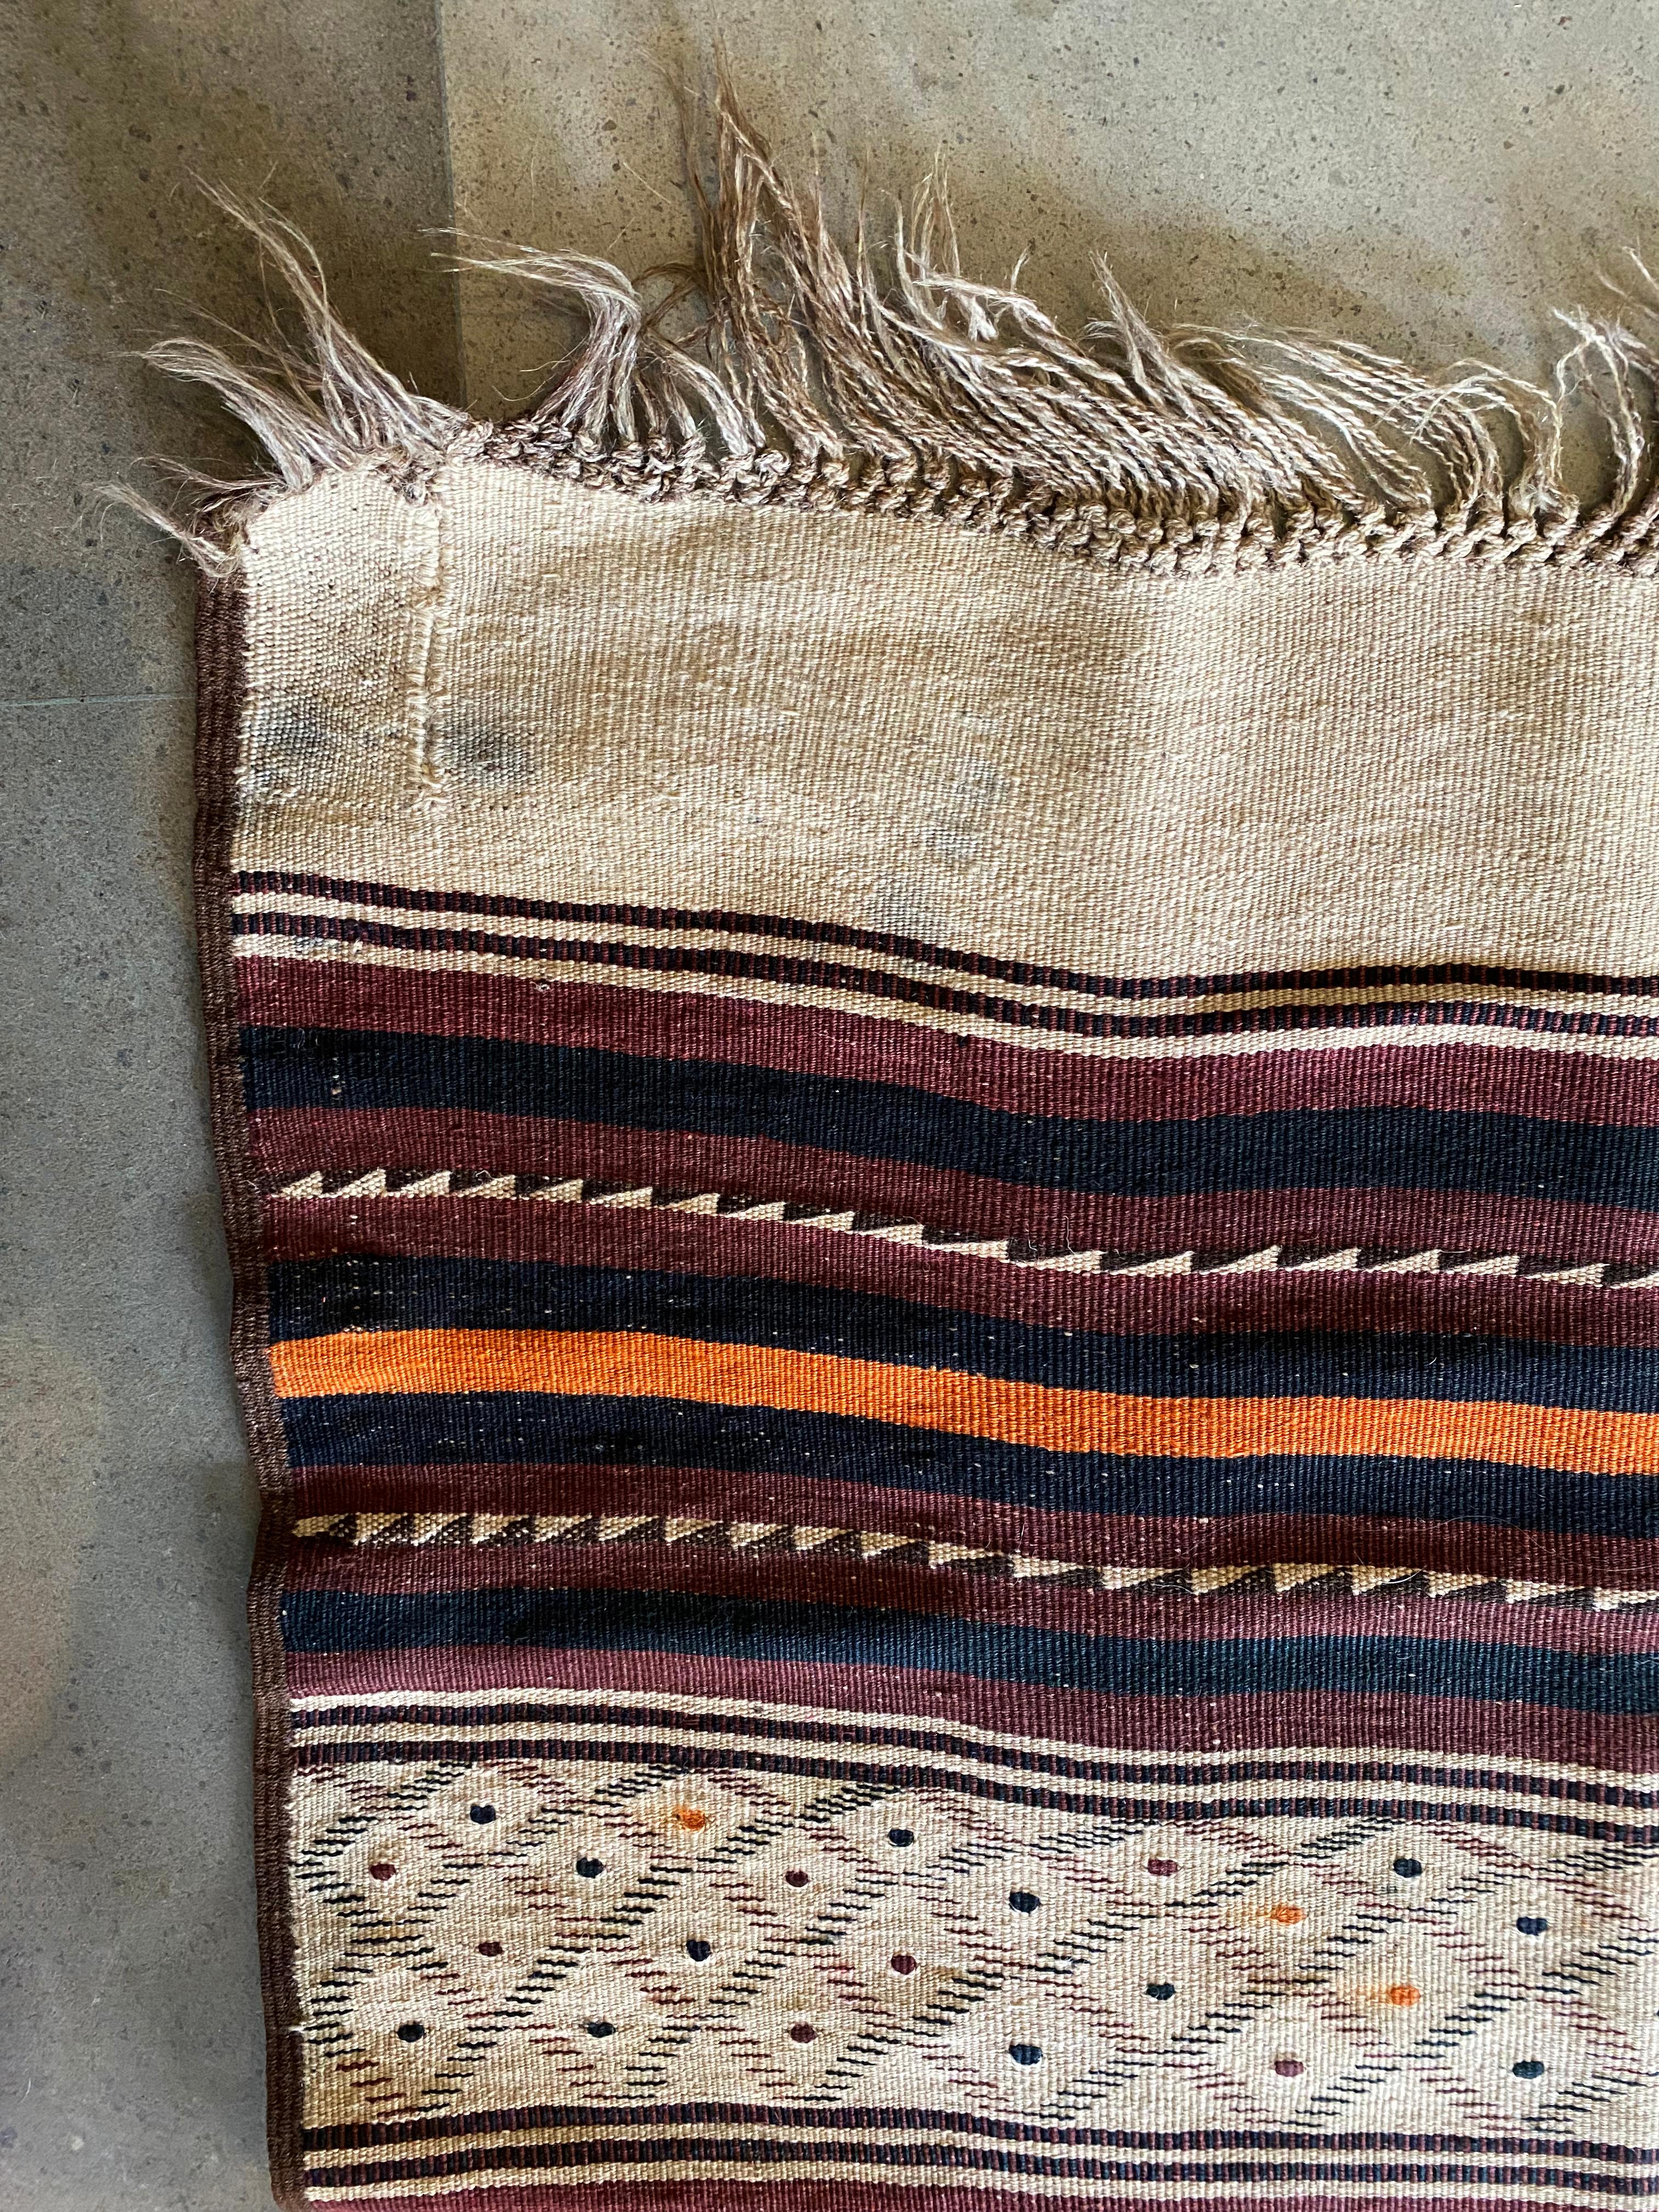 Uzbekistan Tartari Safid Kilim Rug from Wool, Early 20th Century For Sale 1